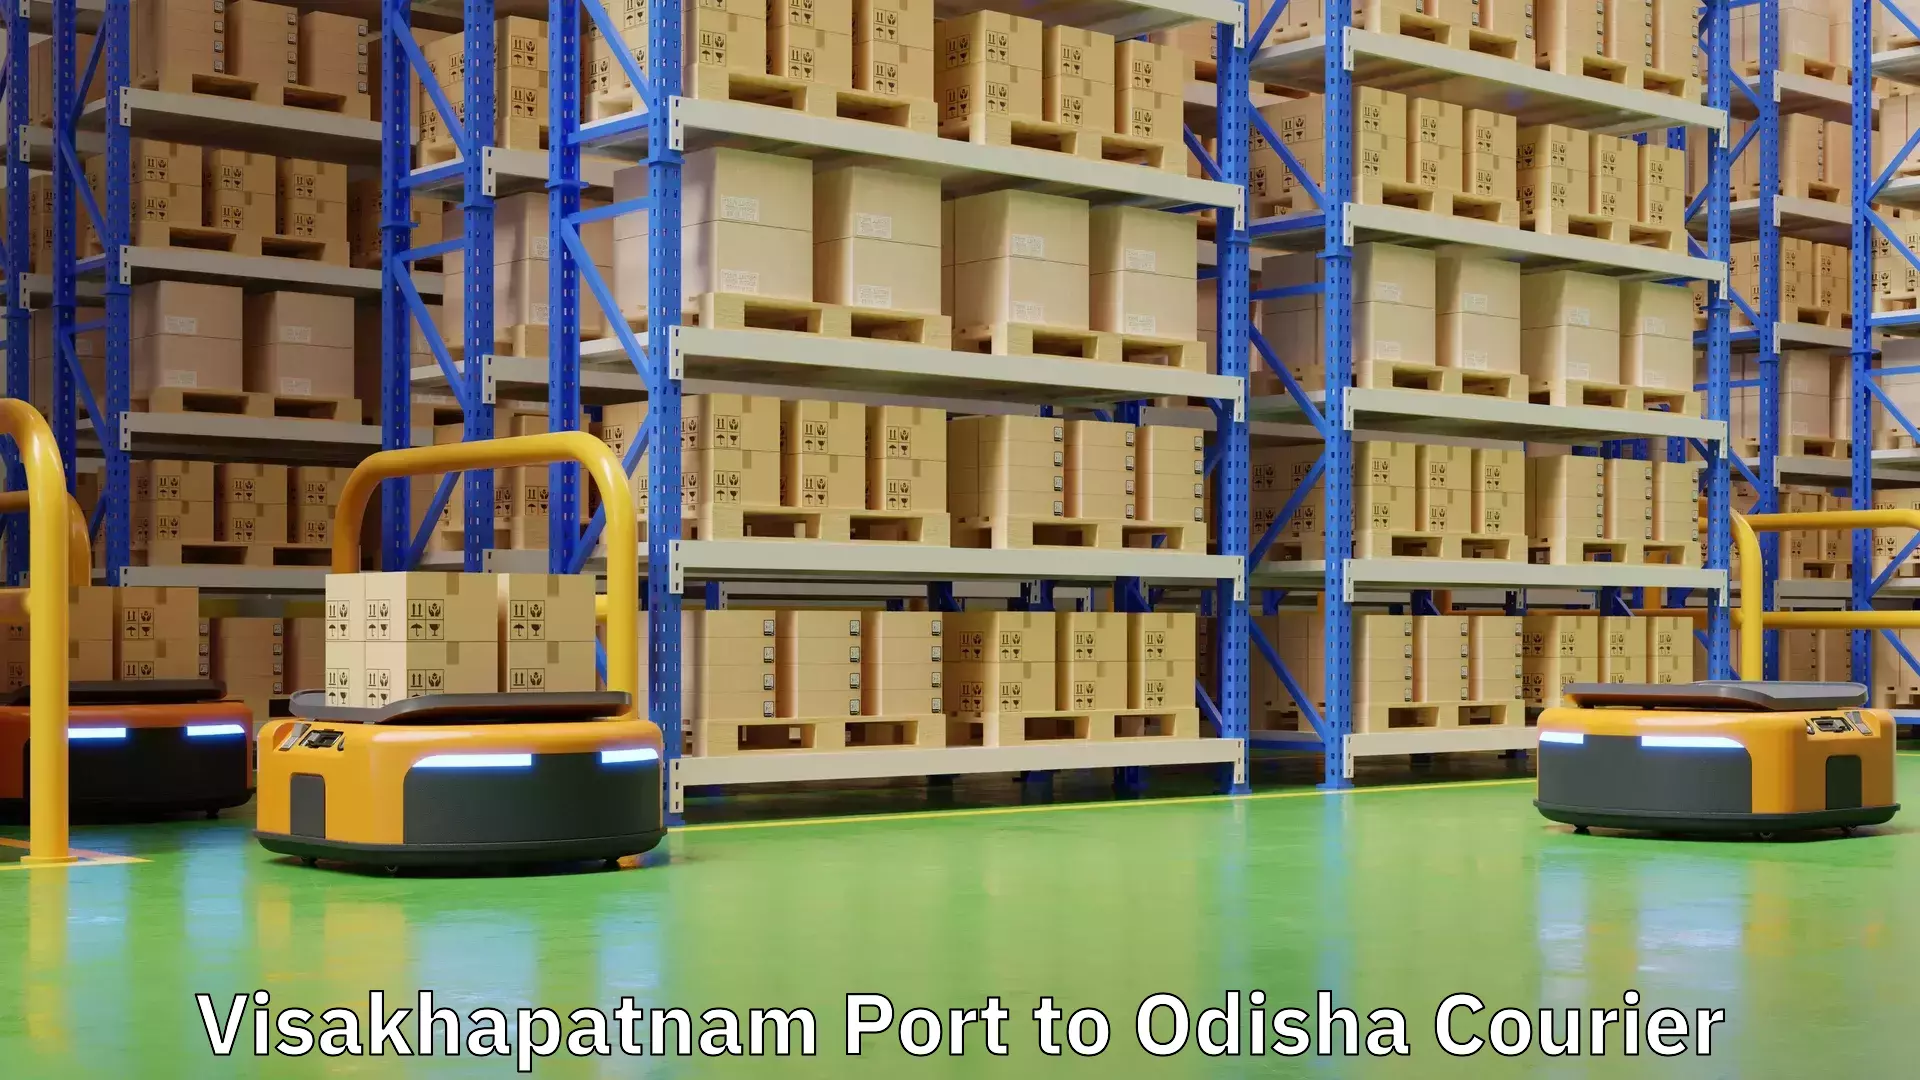 Global shipping networks Visakhapatnam Port to Odisha